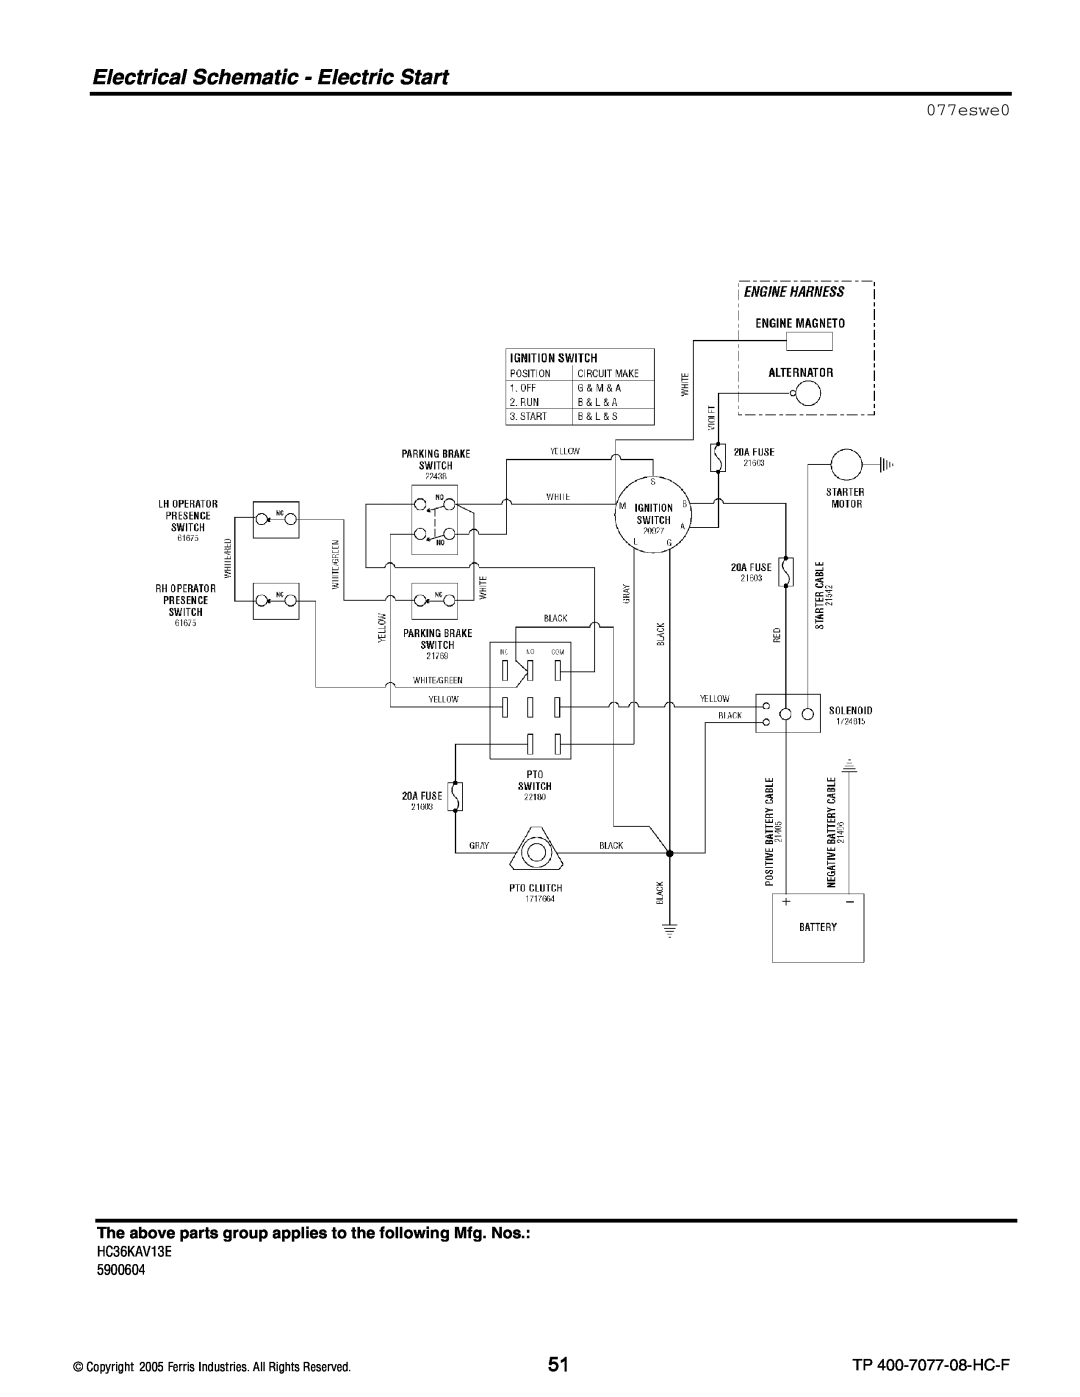 Ferris Industries HC36KAV13E, HC32KAV13 manual Electrical Schematic - Electric Start, 077eswe0 